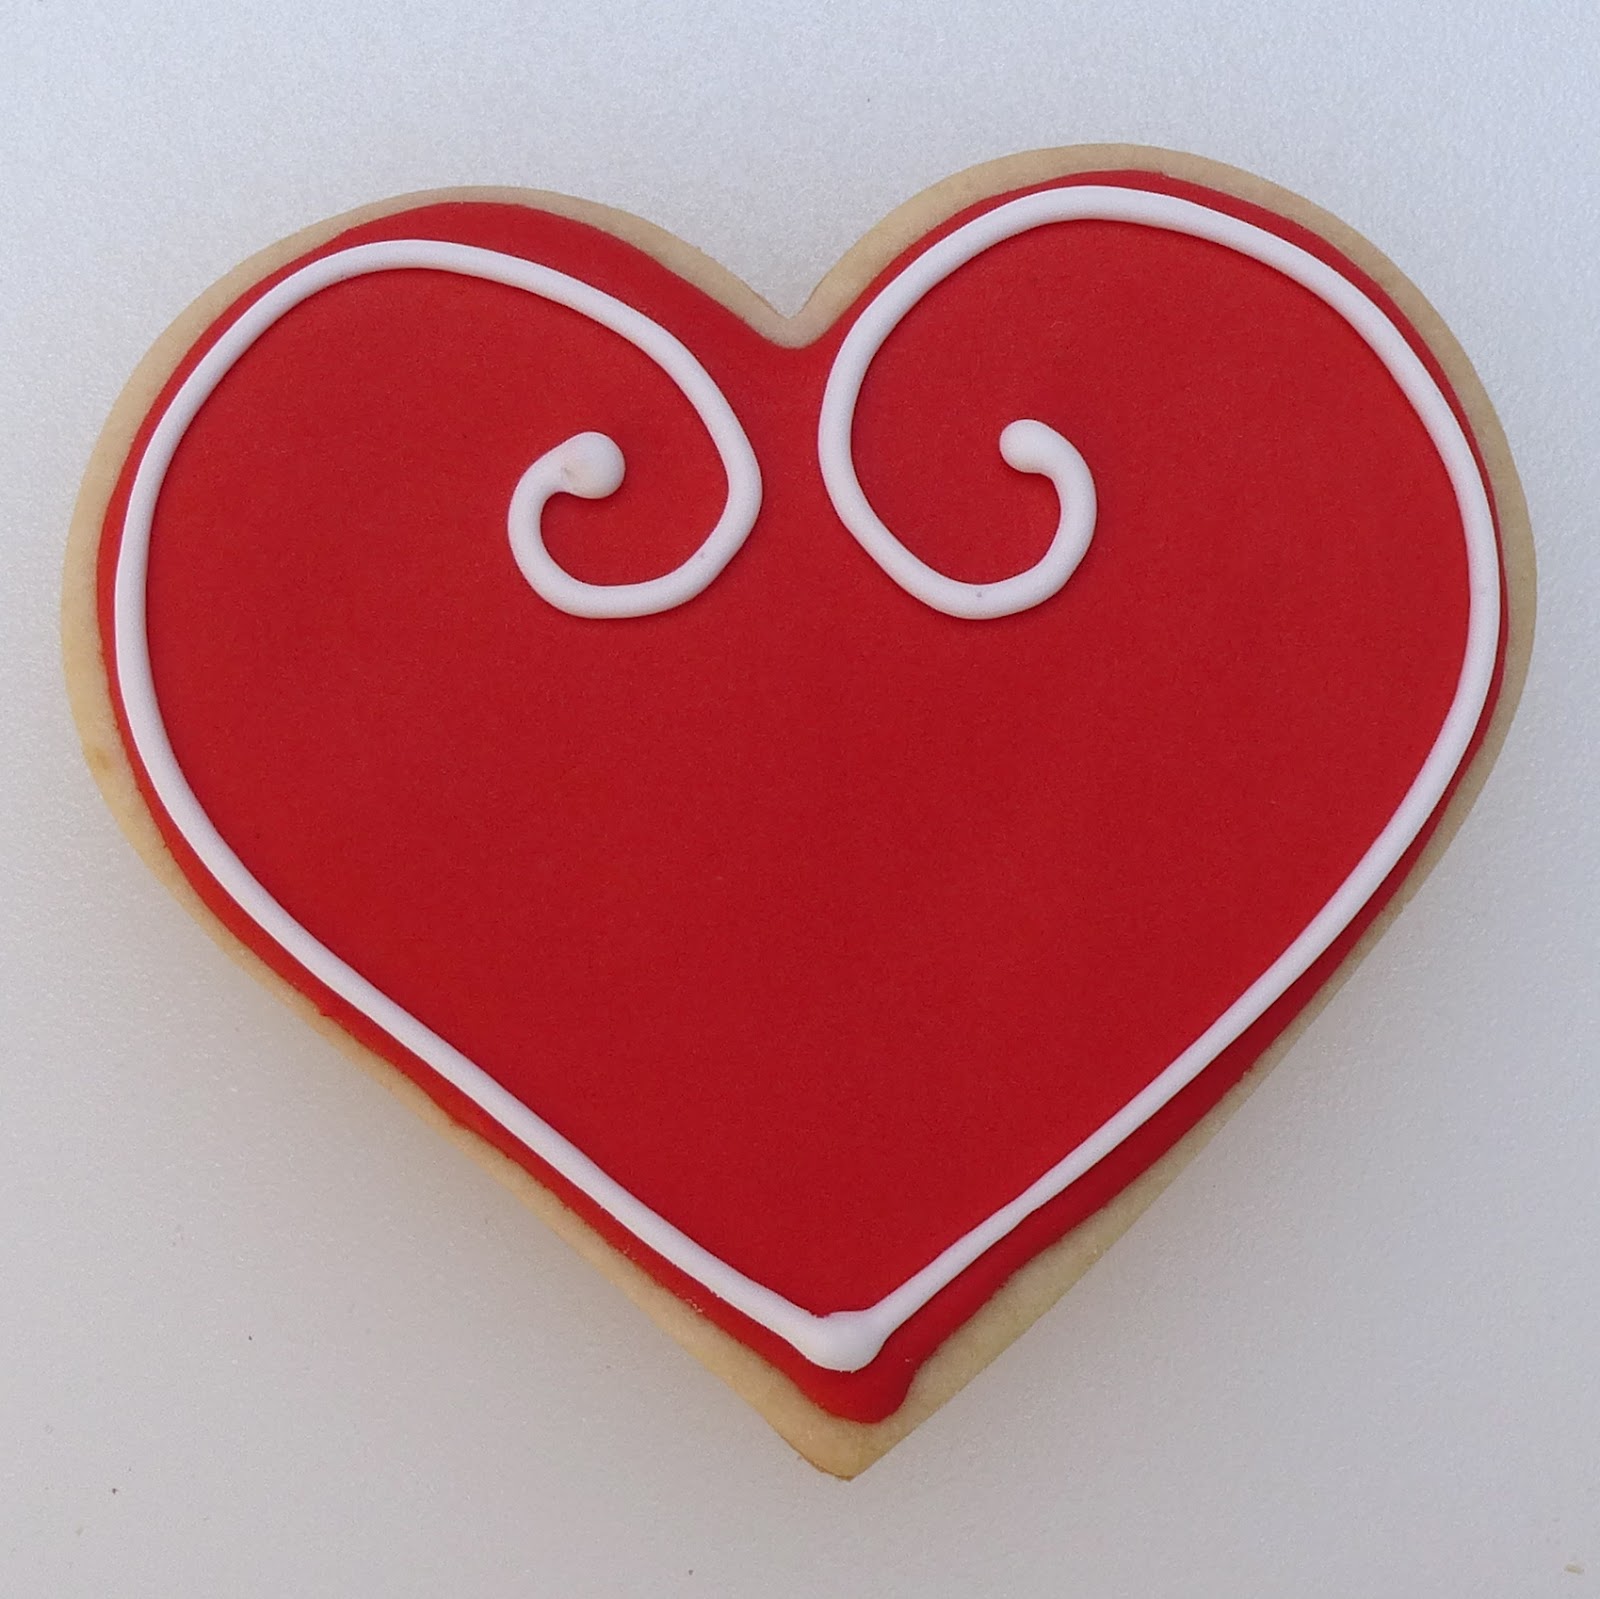 Nina's Show & Tell: Big Heart Cookies